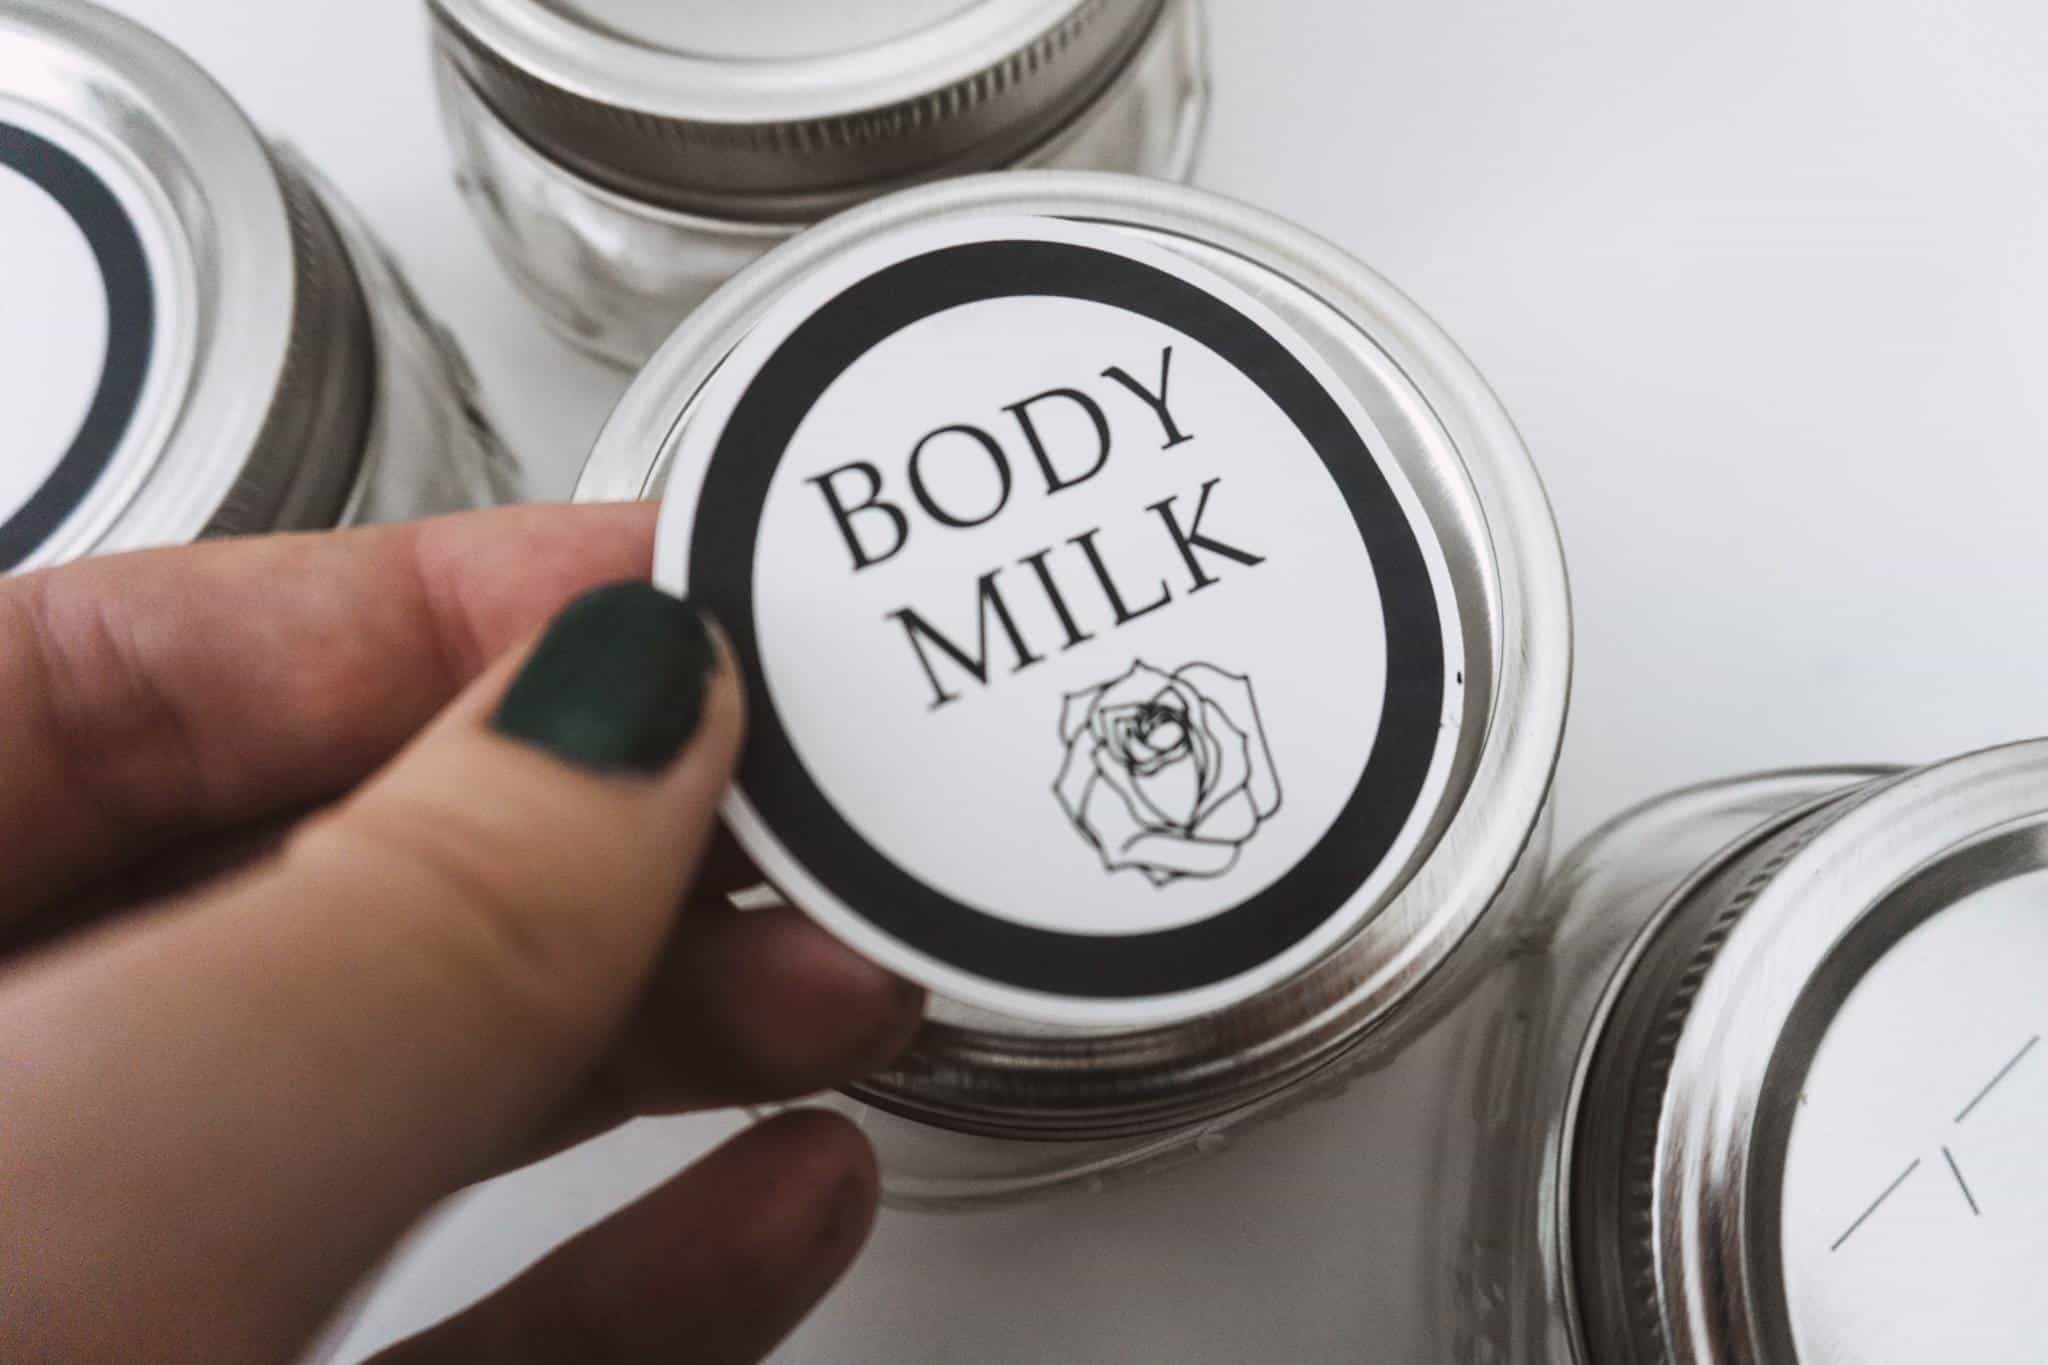 body milk sticker